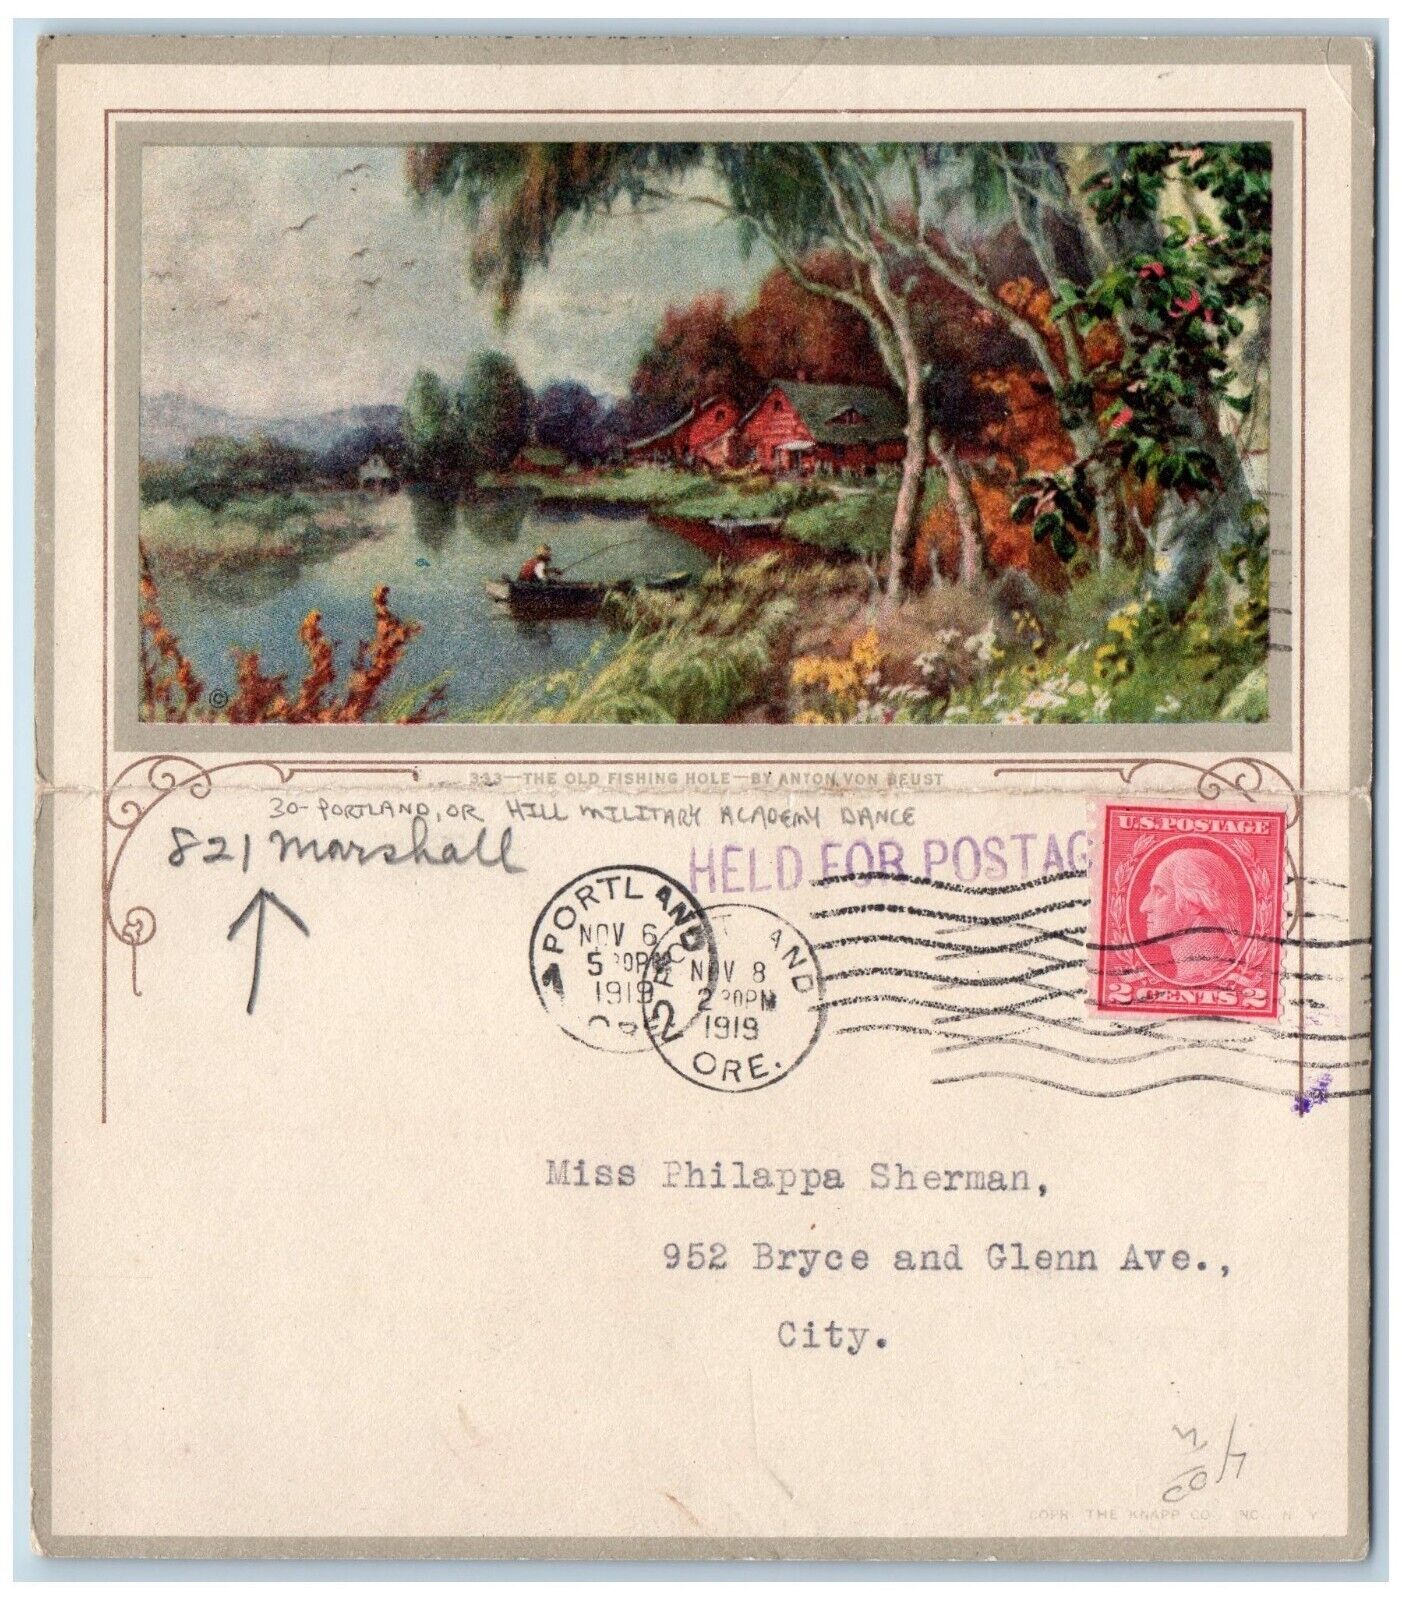 Portland Oregon Postcard The Old Fishing Hole Hill Military Academy Dance 1919